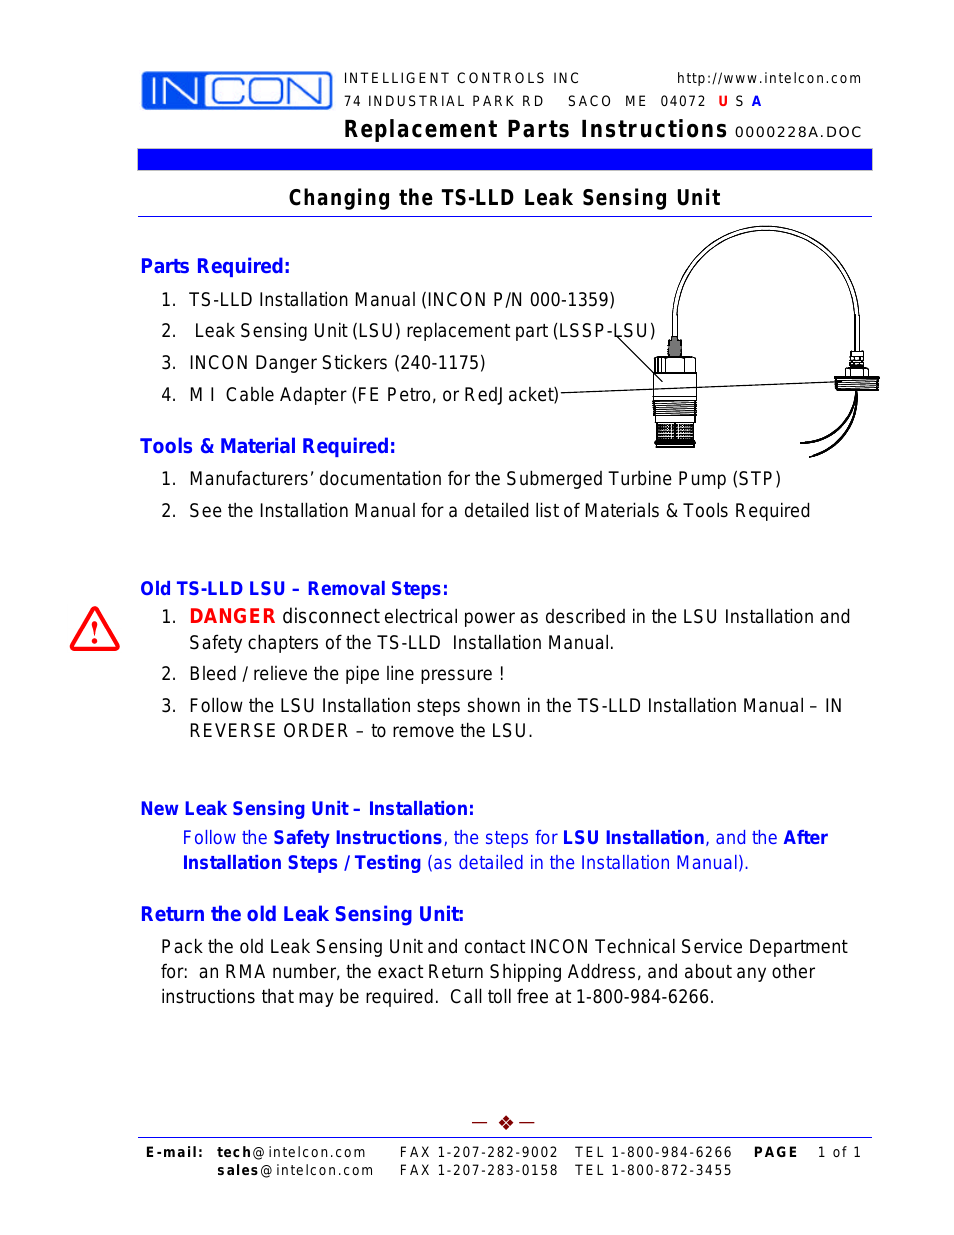 TS-LLD Changing the TS-LLD Leak Sensing Unit